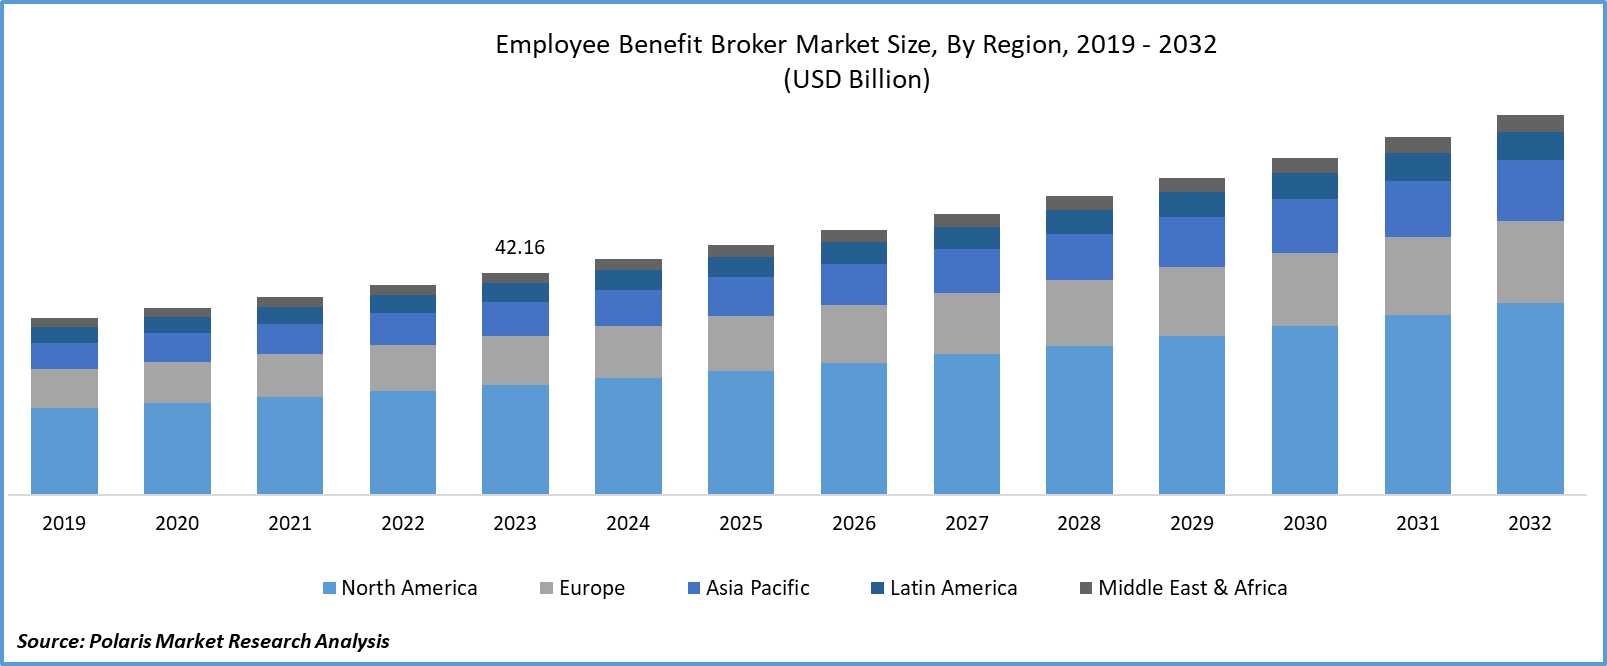 Employee Benefit Broker Market Size